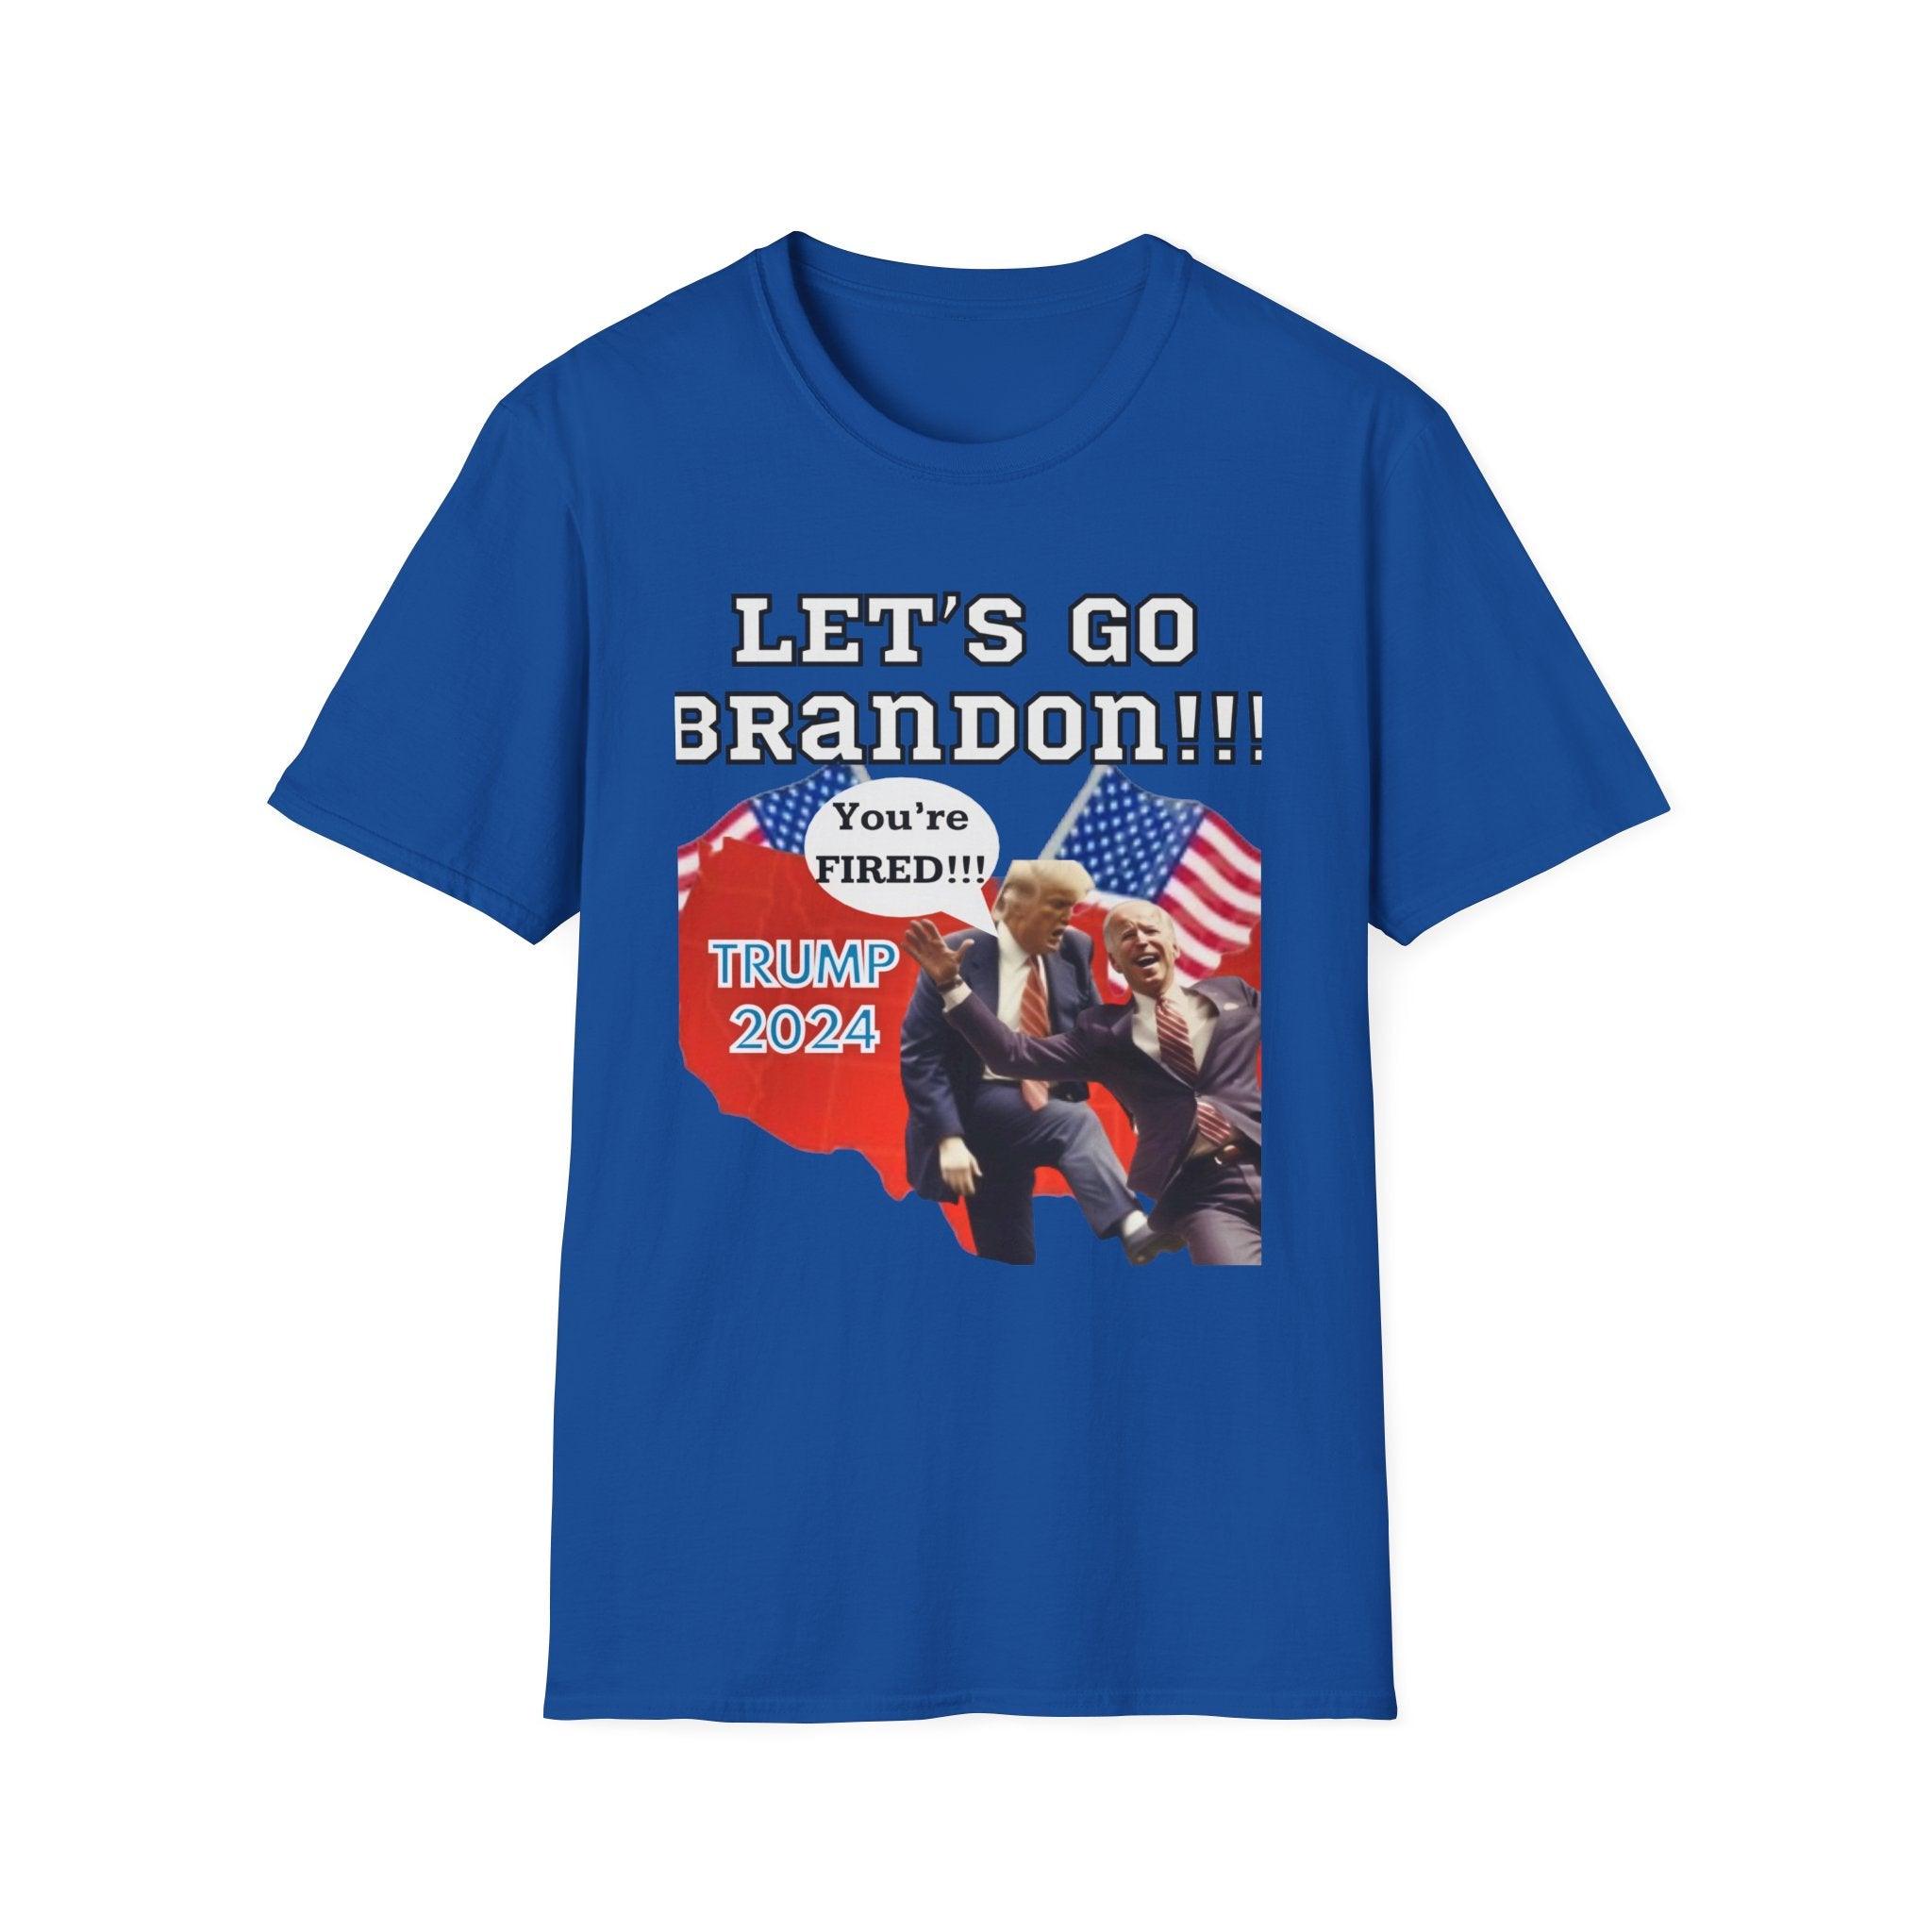 Trump 2024 - let’s go Brandon T-shirt - Epic Shirts 403